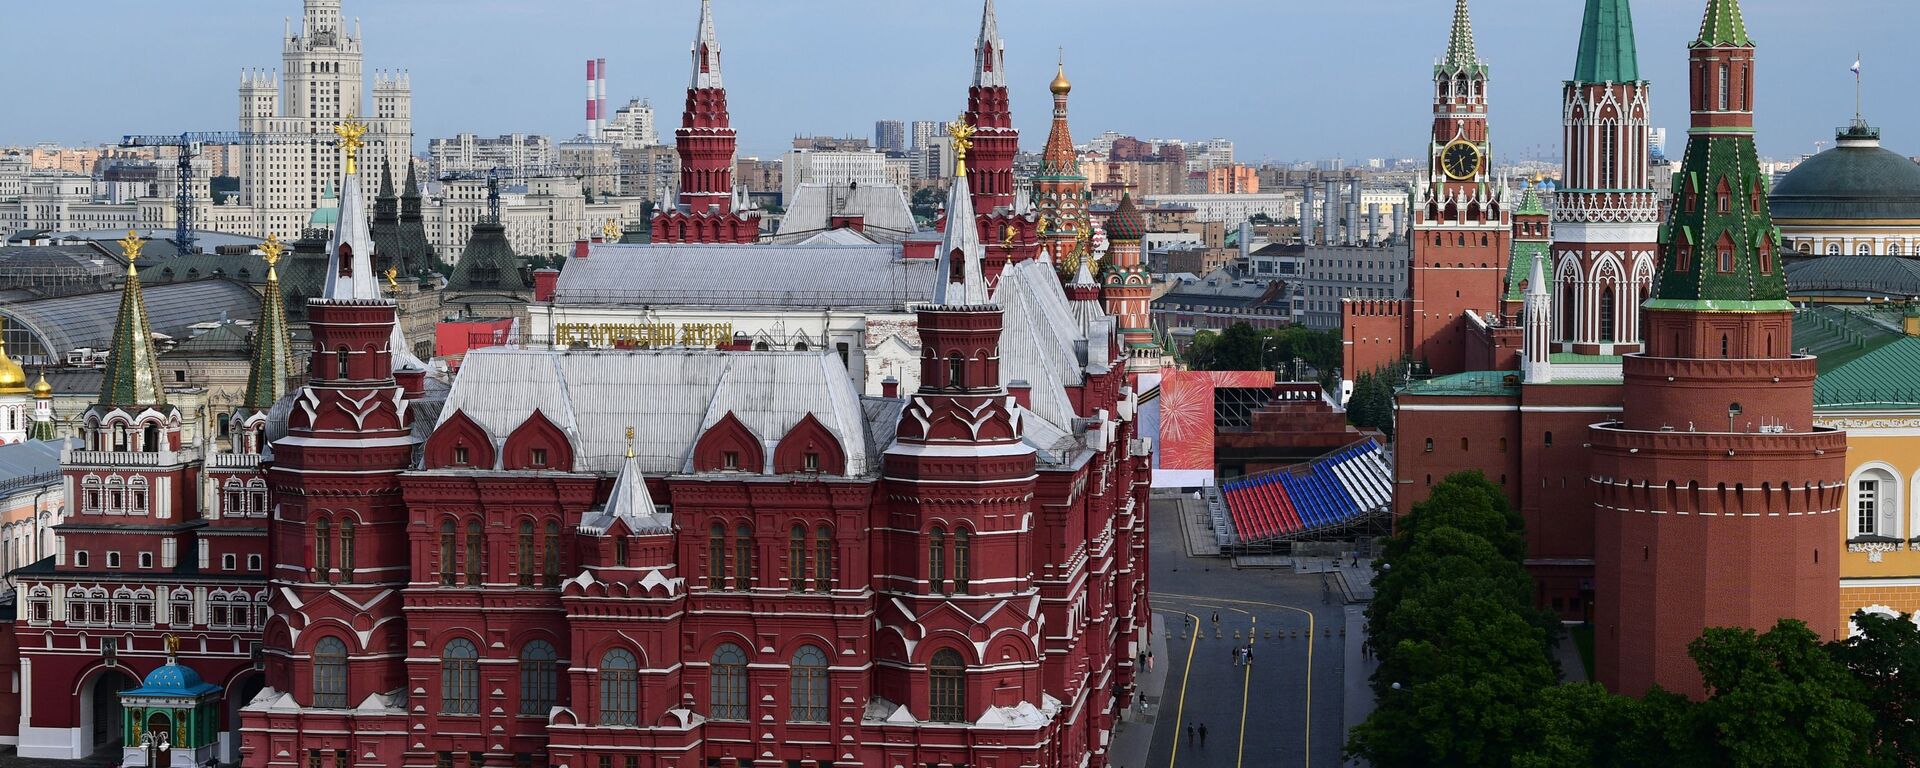 Вид на Кремль в центре Москвы, фото из архива - Sputnik Azərbaycan, 1920, 13.04.2021